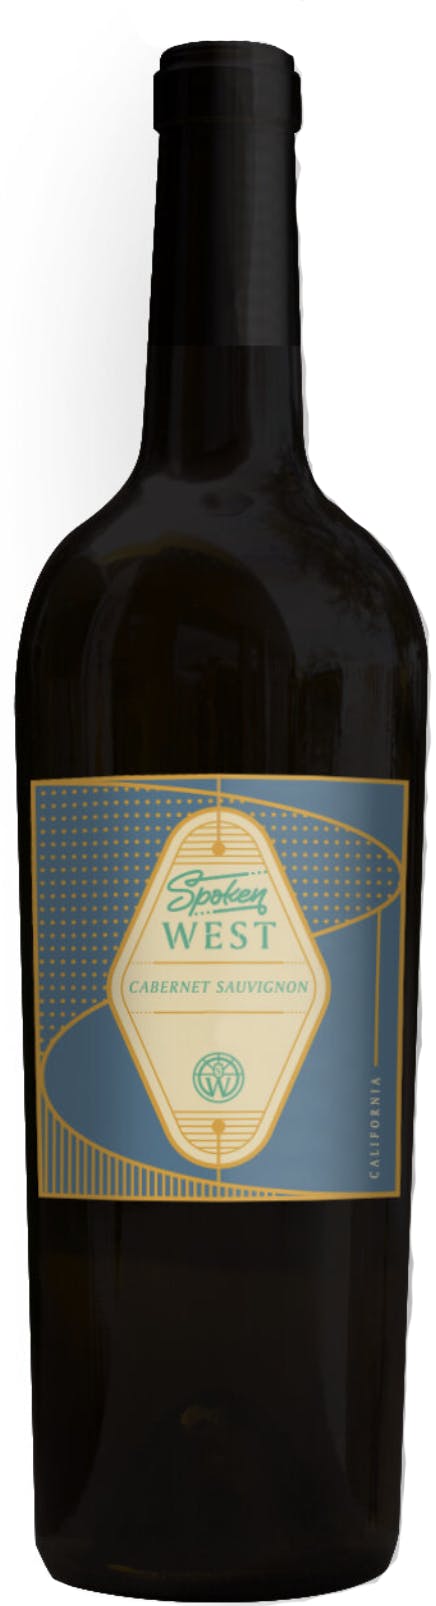 Wine Spoken West Cabernet Sauvignon California